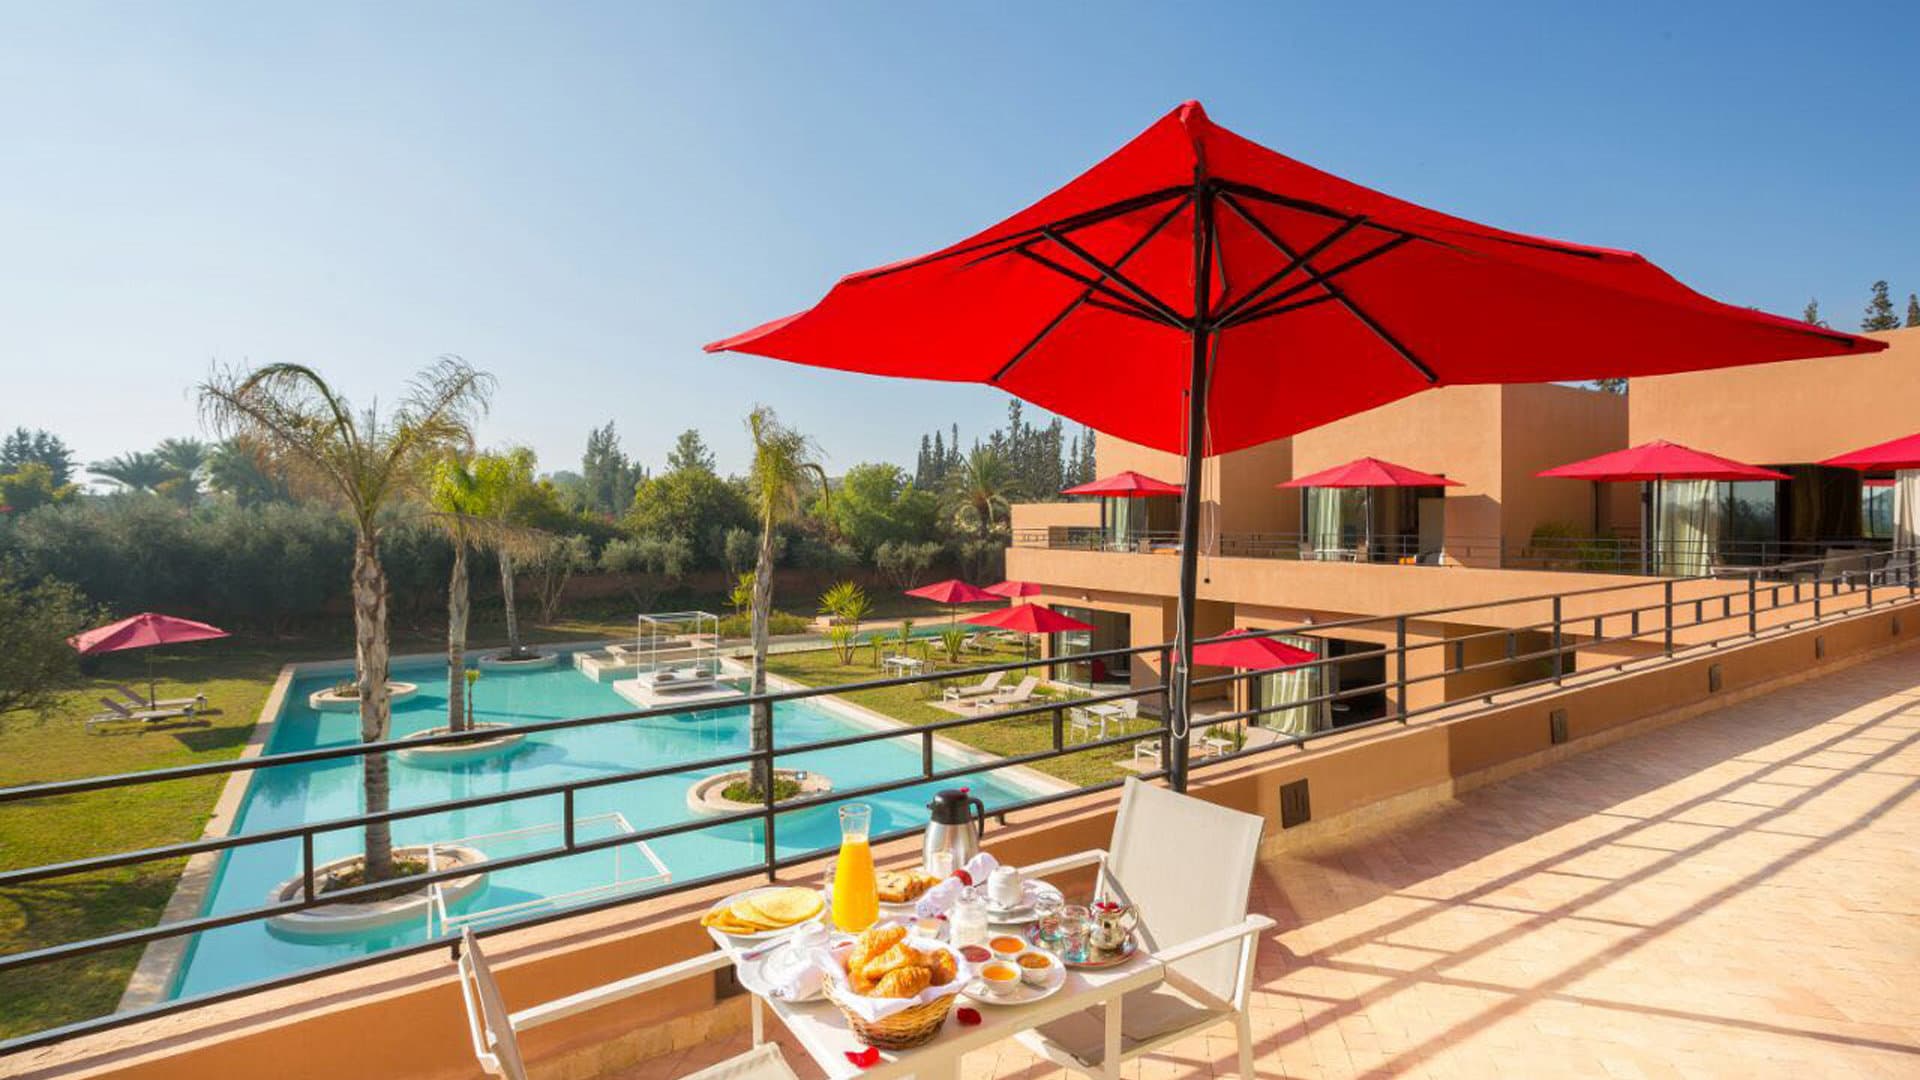 11 Bedroom Villa For Sale Marrakech Lp08724 C0a171023338e00.jpg